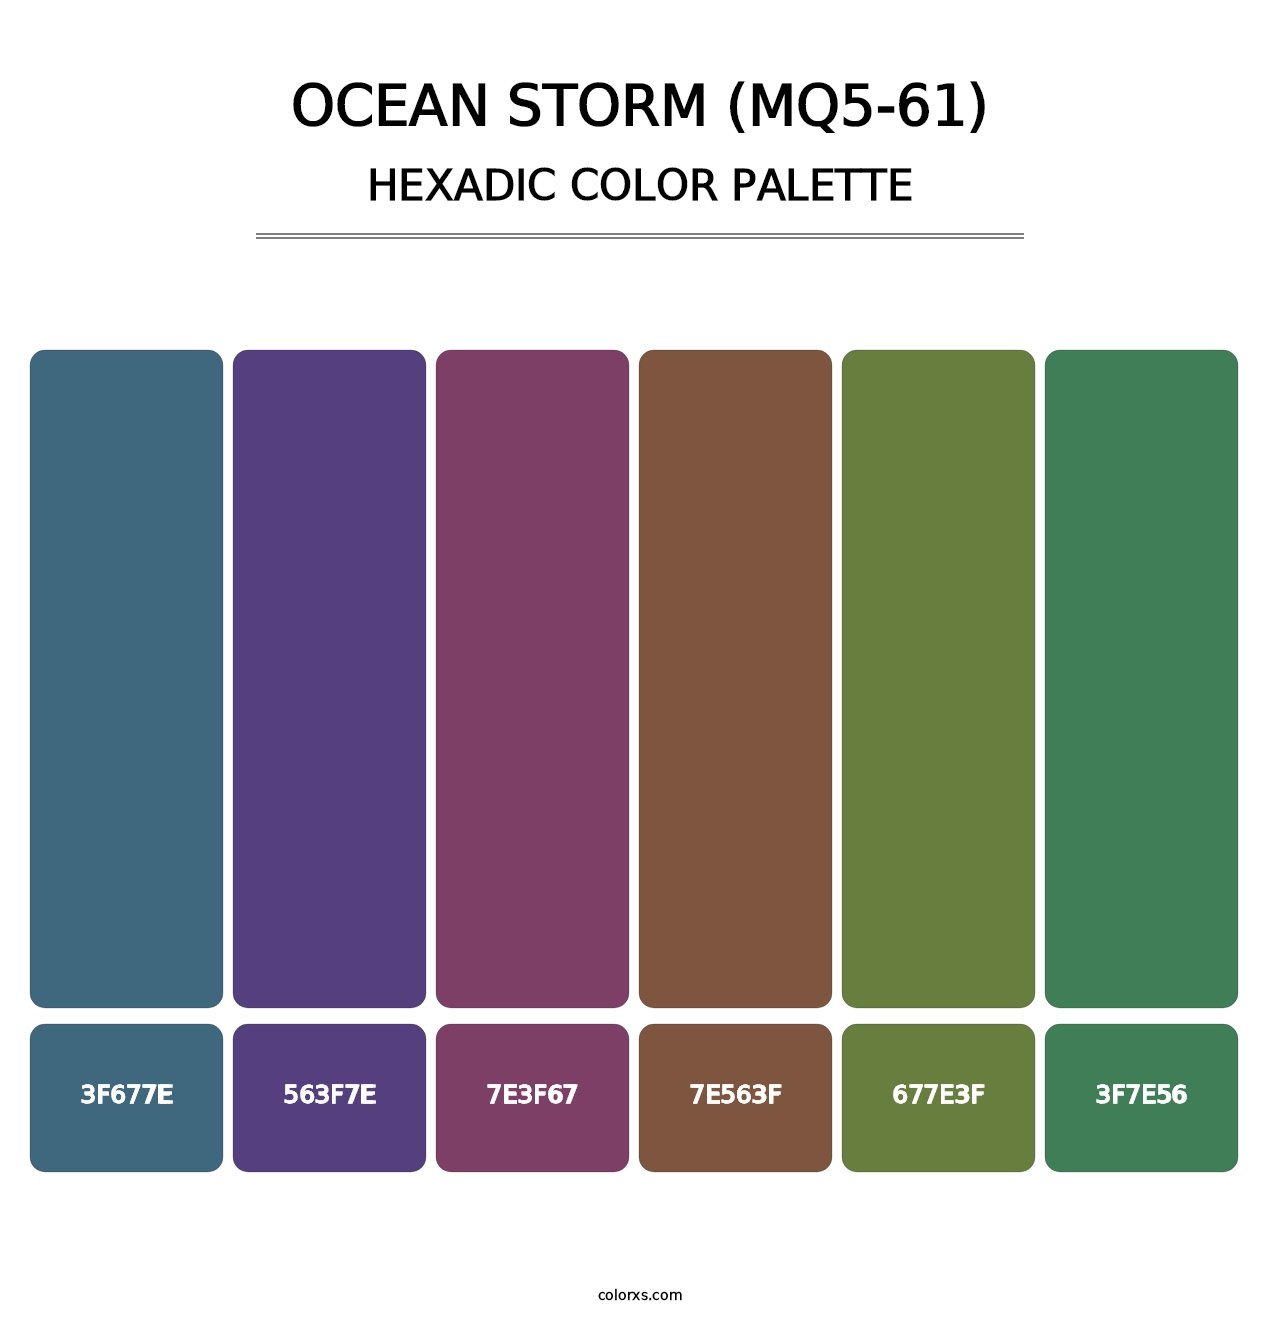 Ocean Storm (MQ5-61) - Hexadic Color Palette